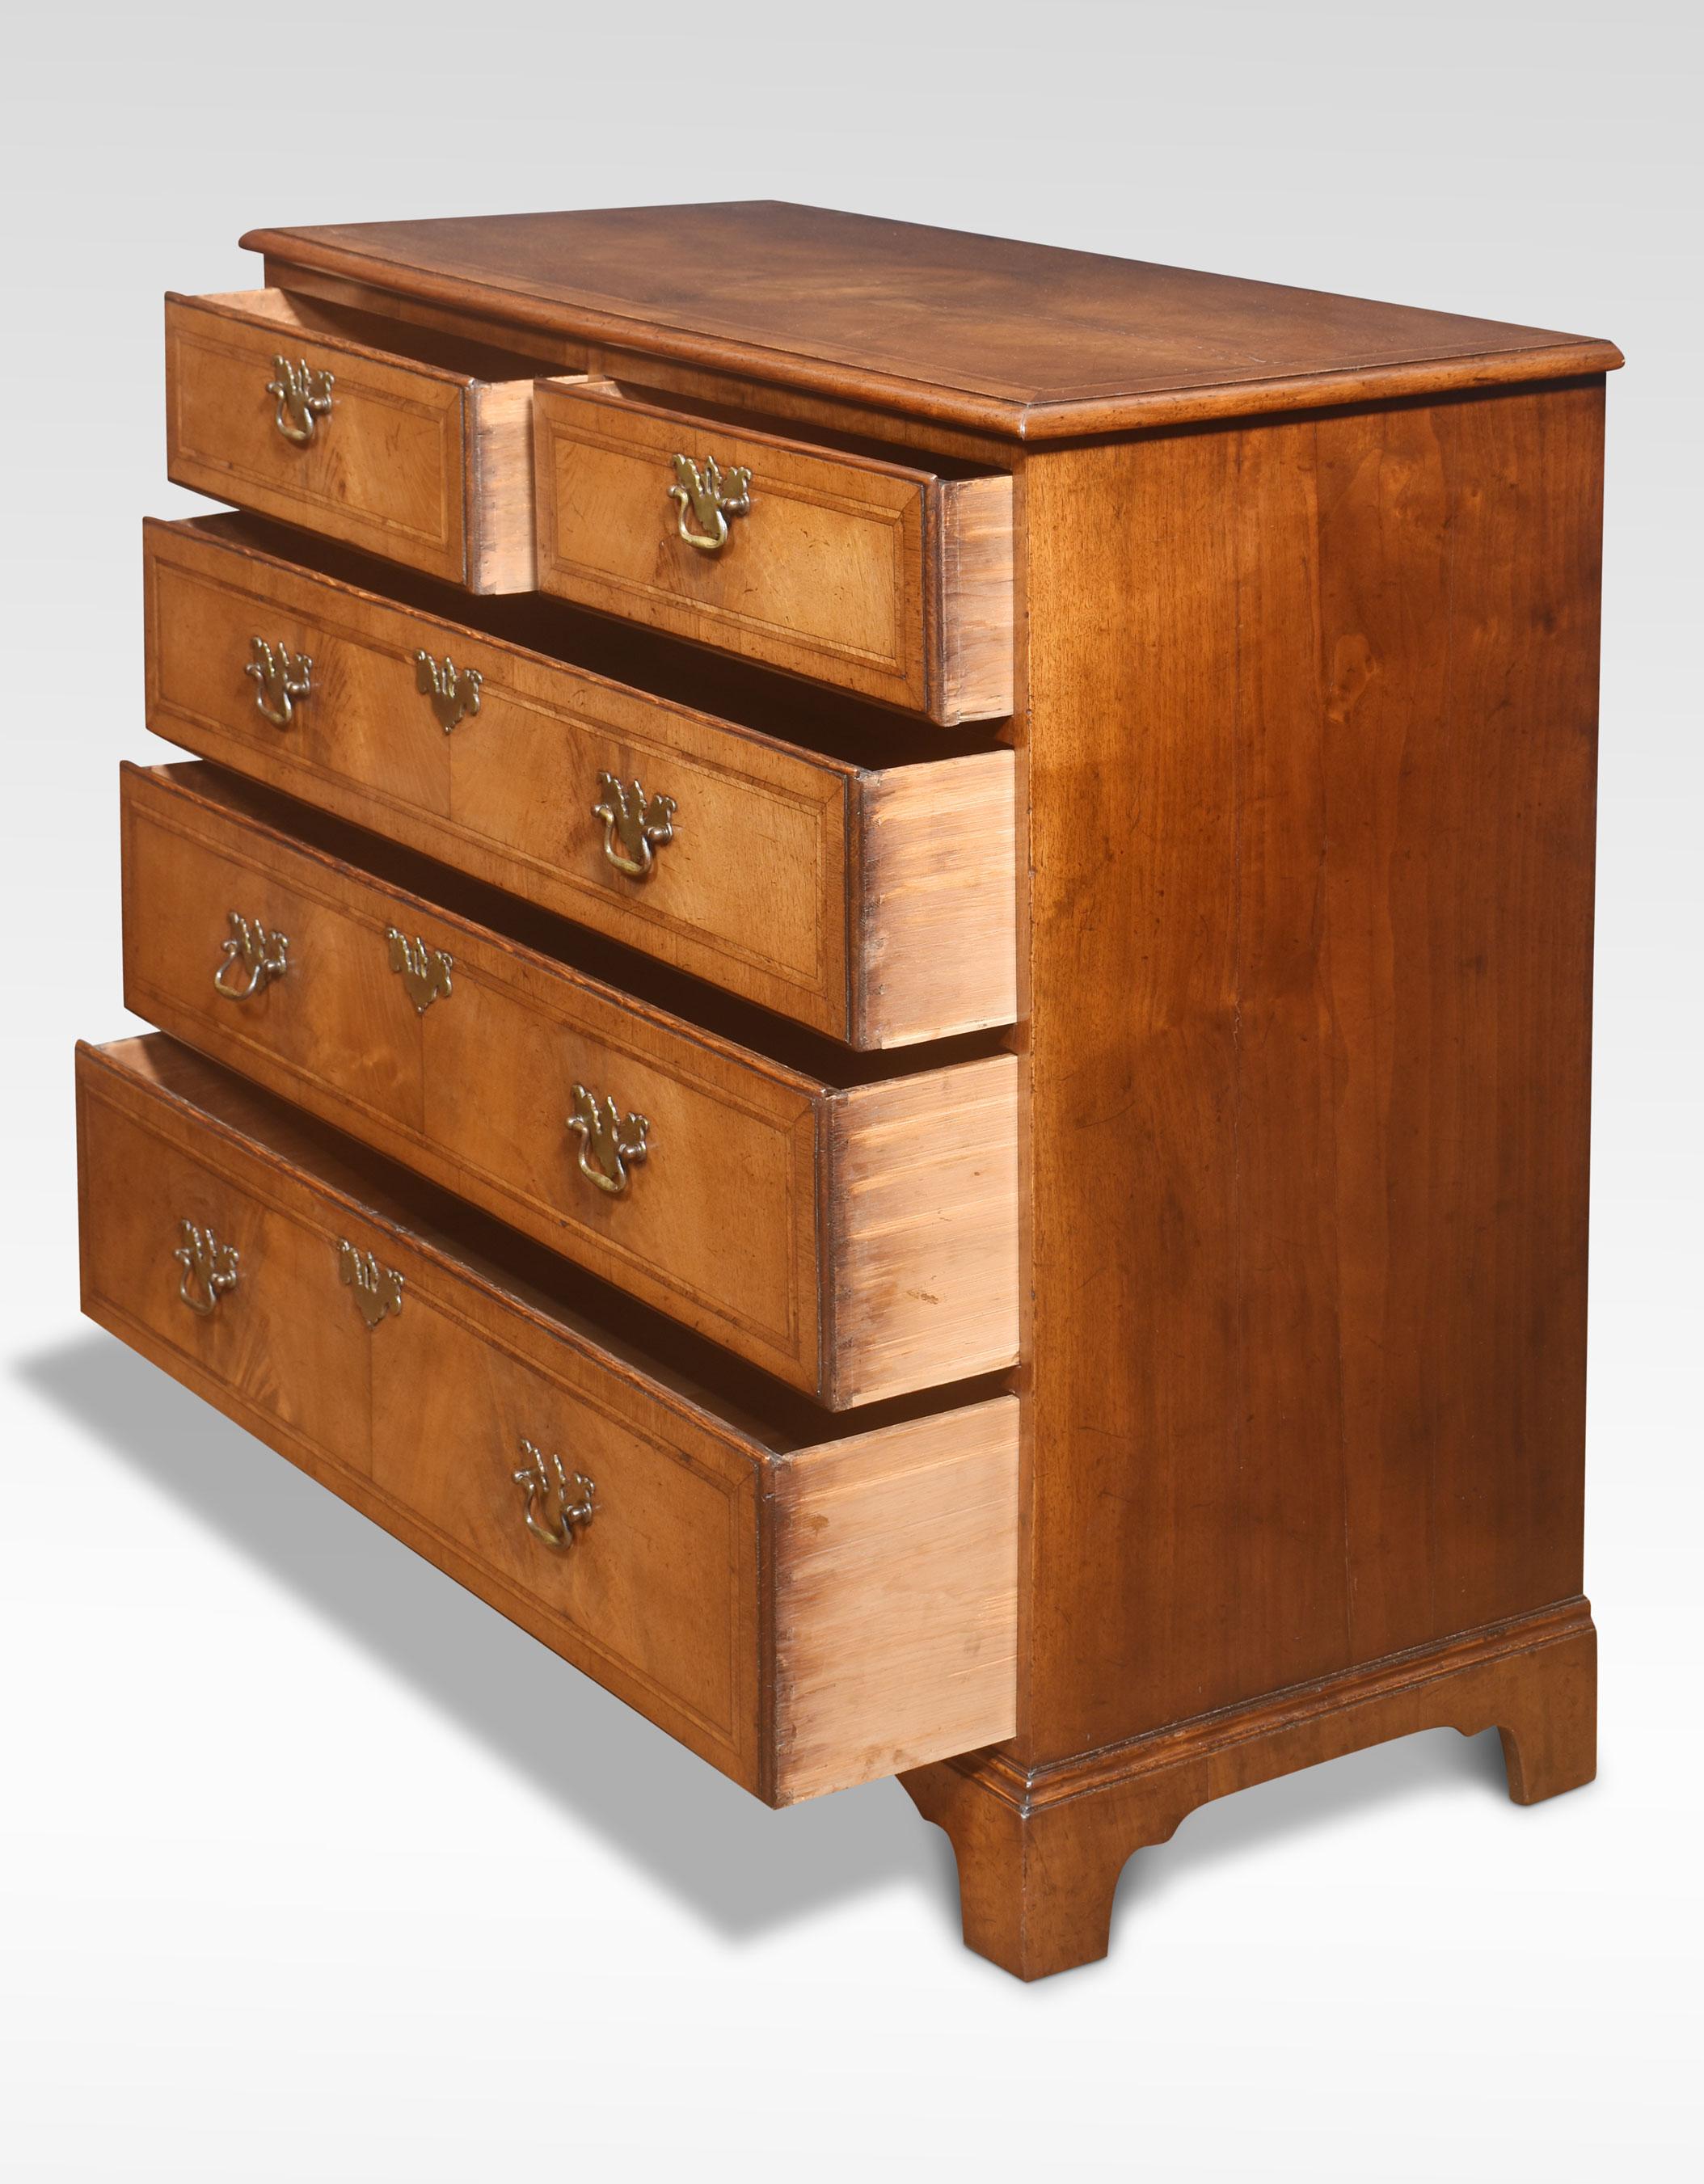 Walnut Georgian revival walnut chest of drawers